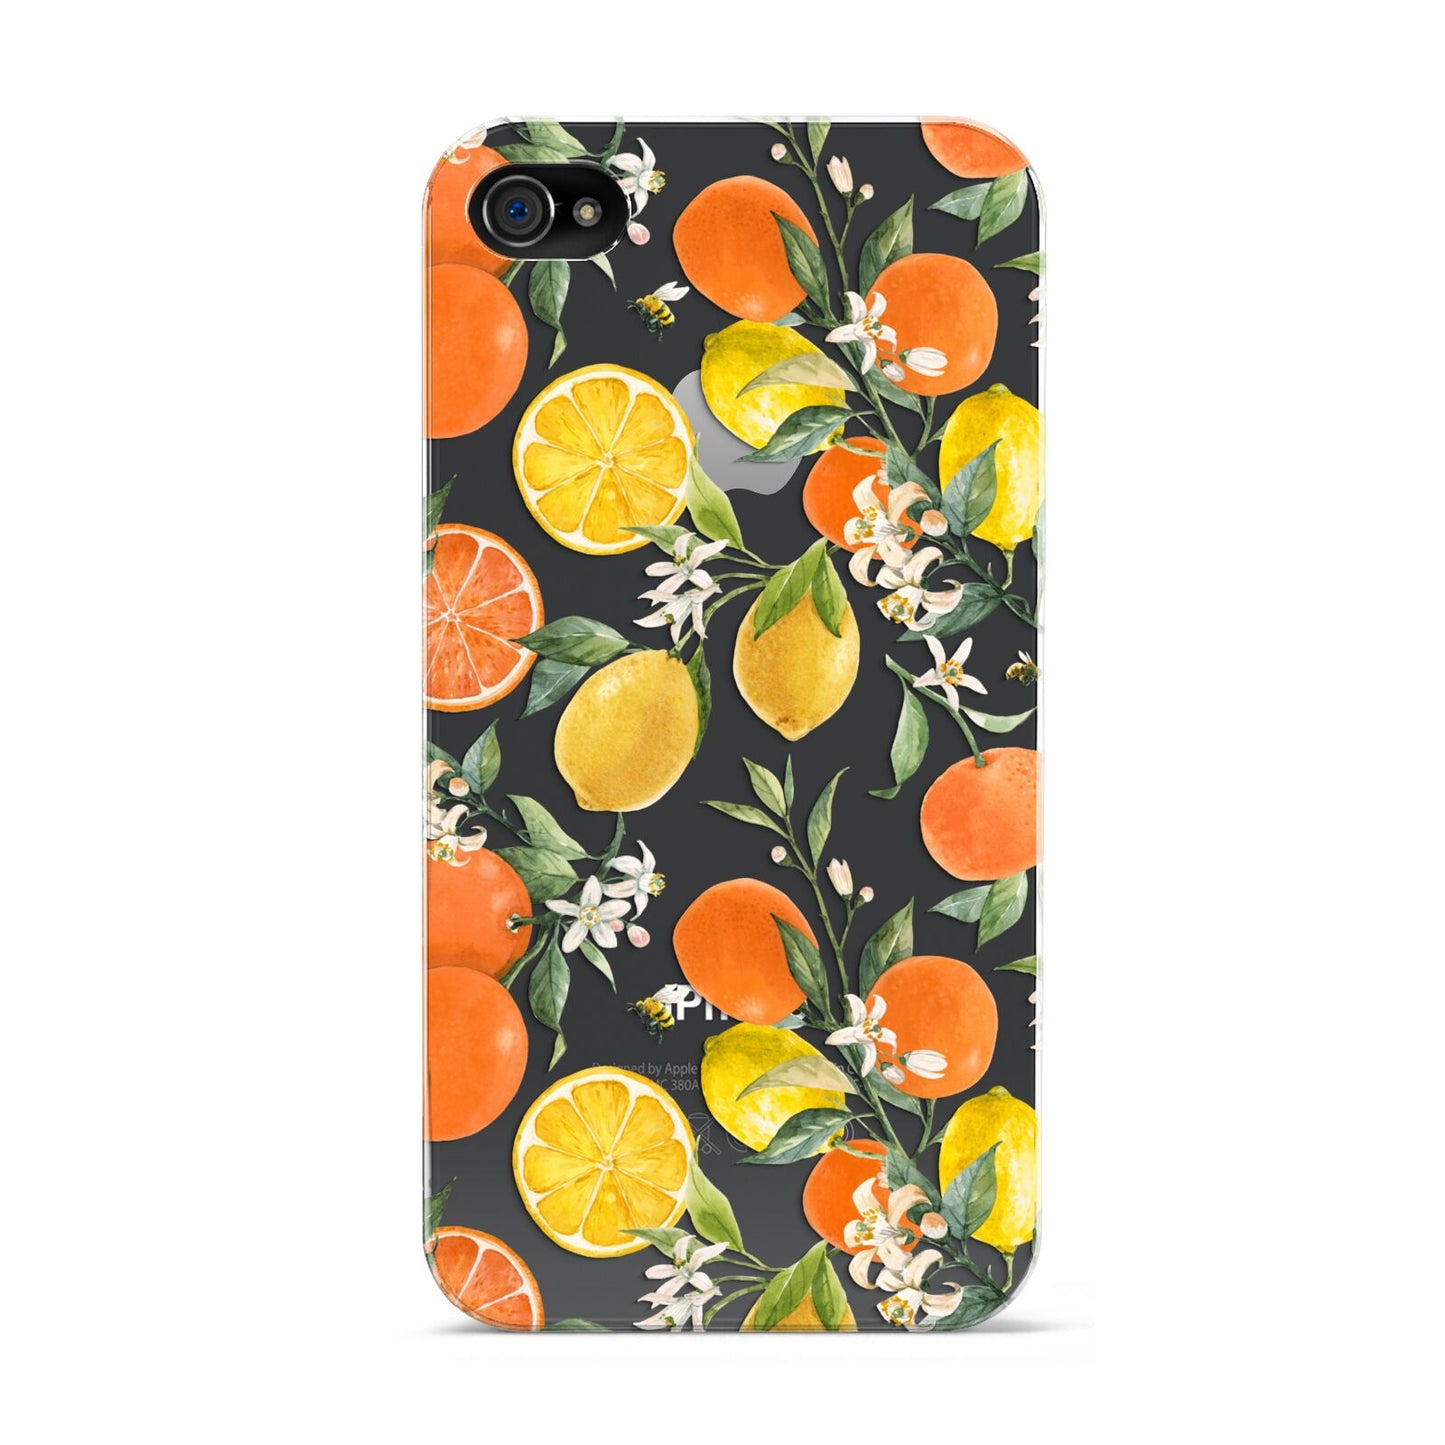 Lemons and Oranges Apple iPhone 4s Case